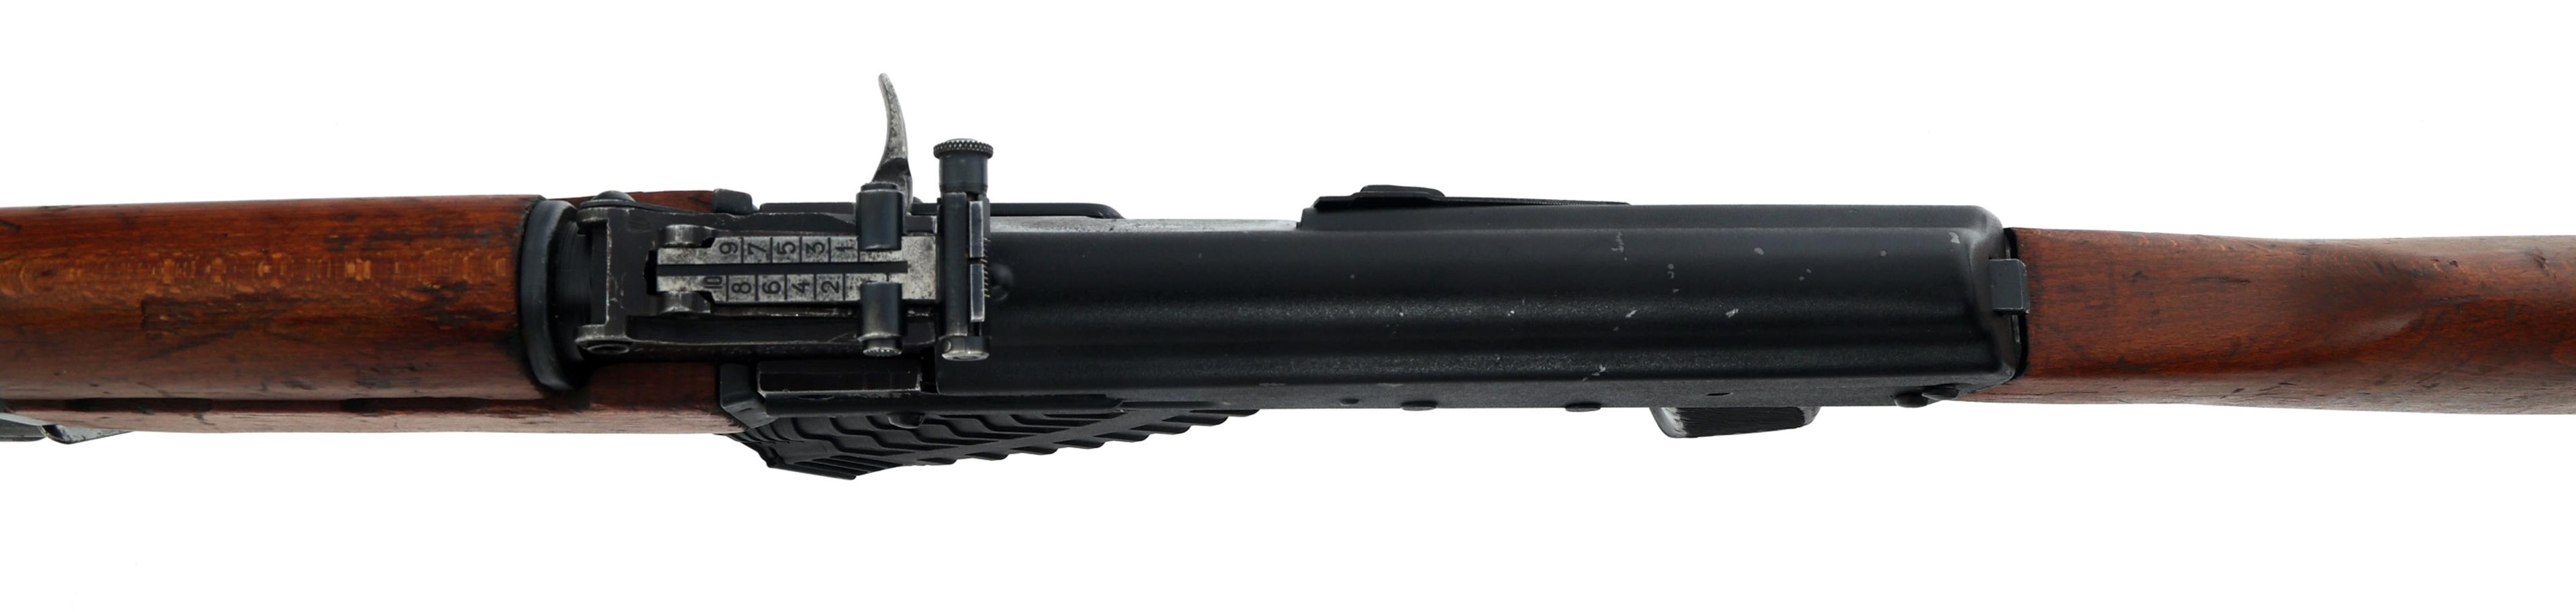 VULCAN MODEL V47 7.62x39mm CALIBER RIFLE